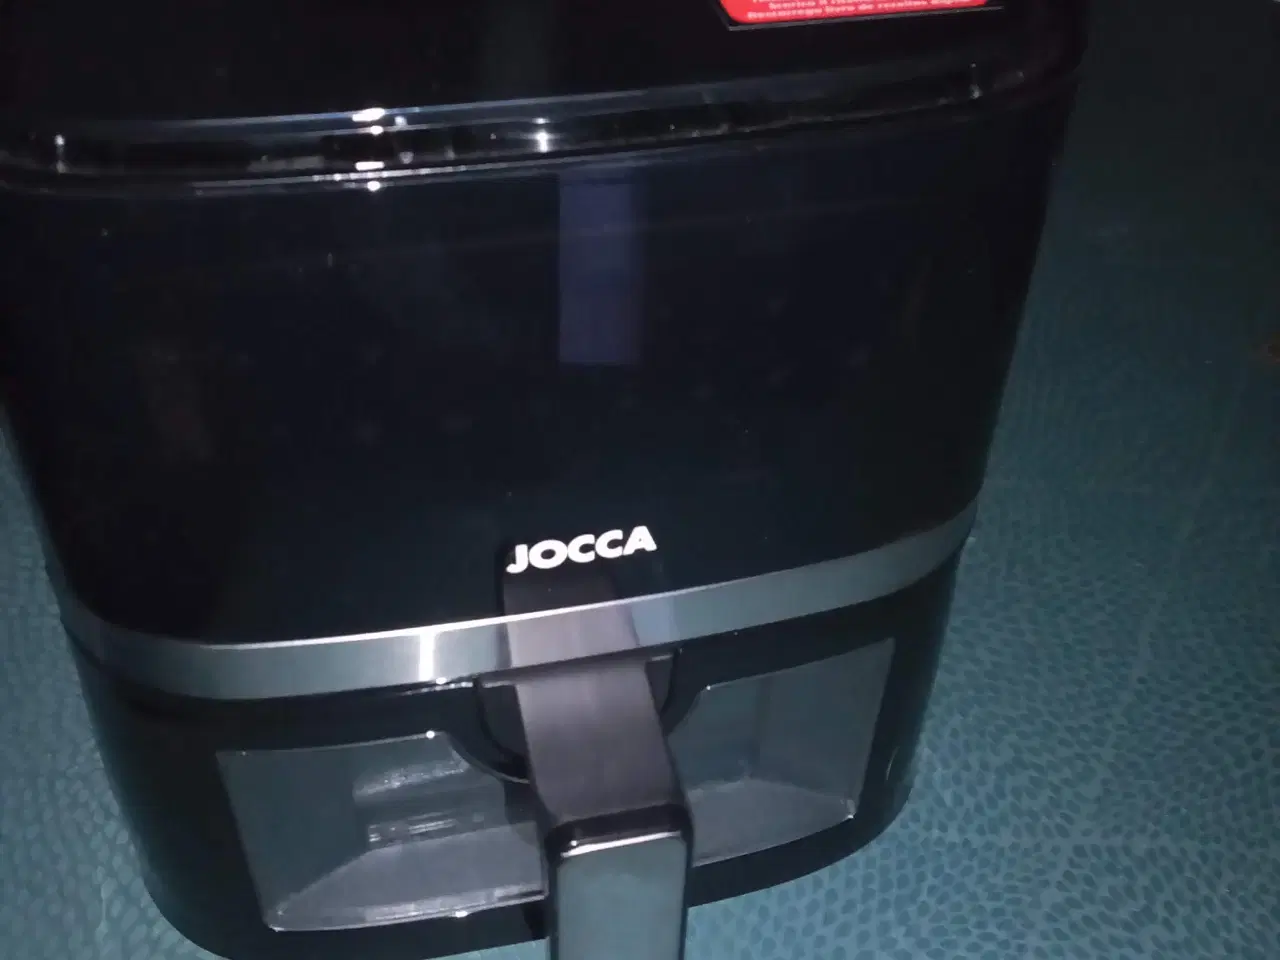 Billede 1 - Jocca airfryer sælges